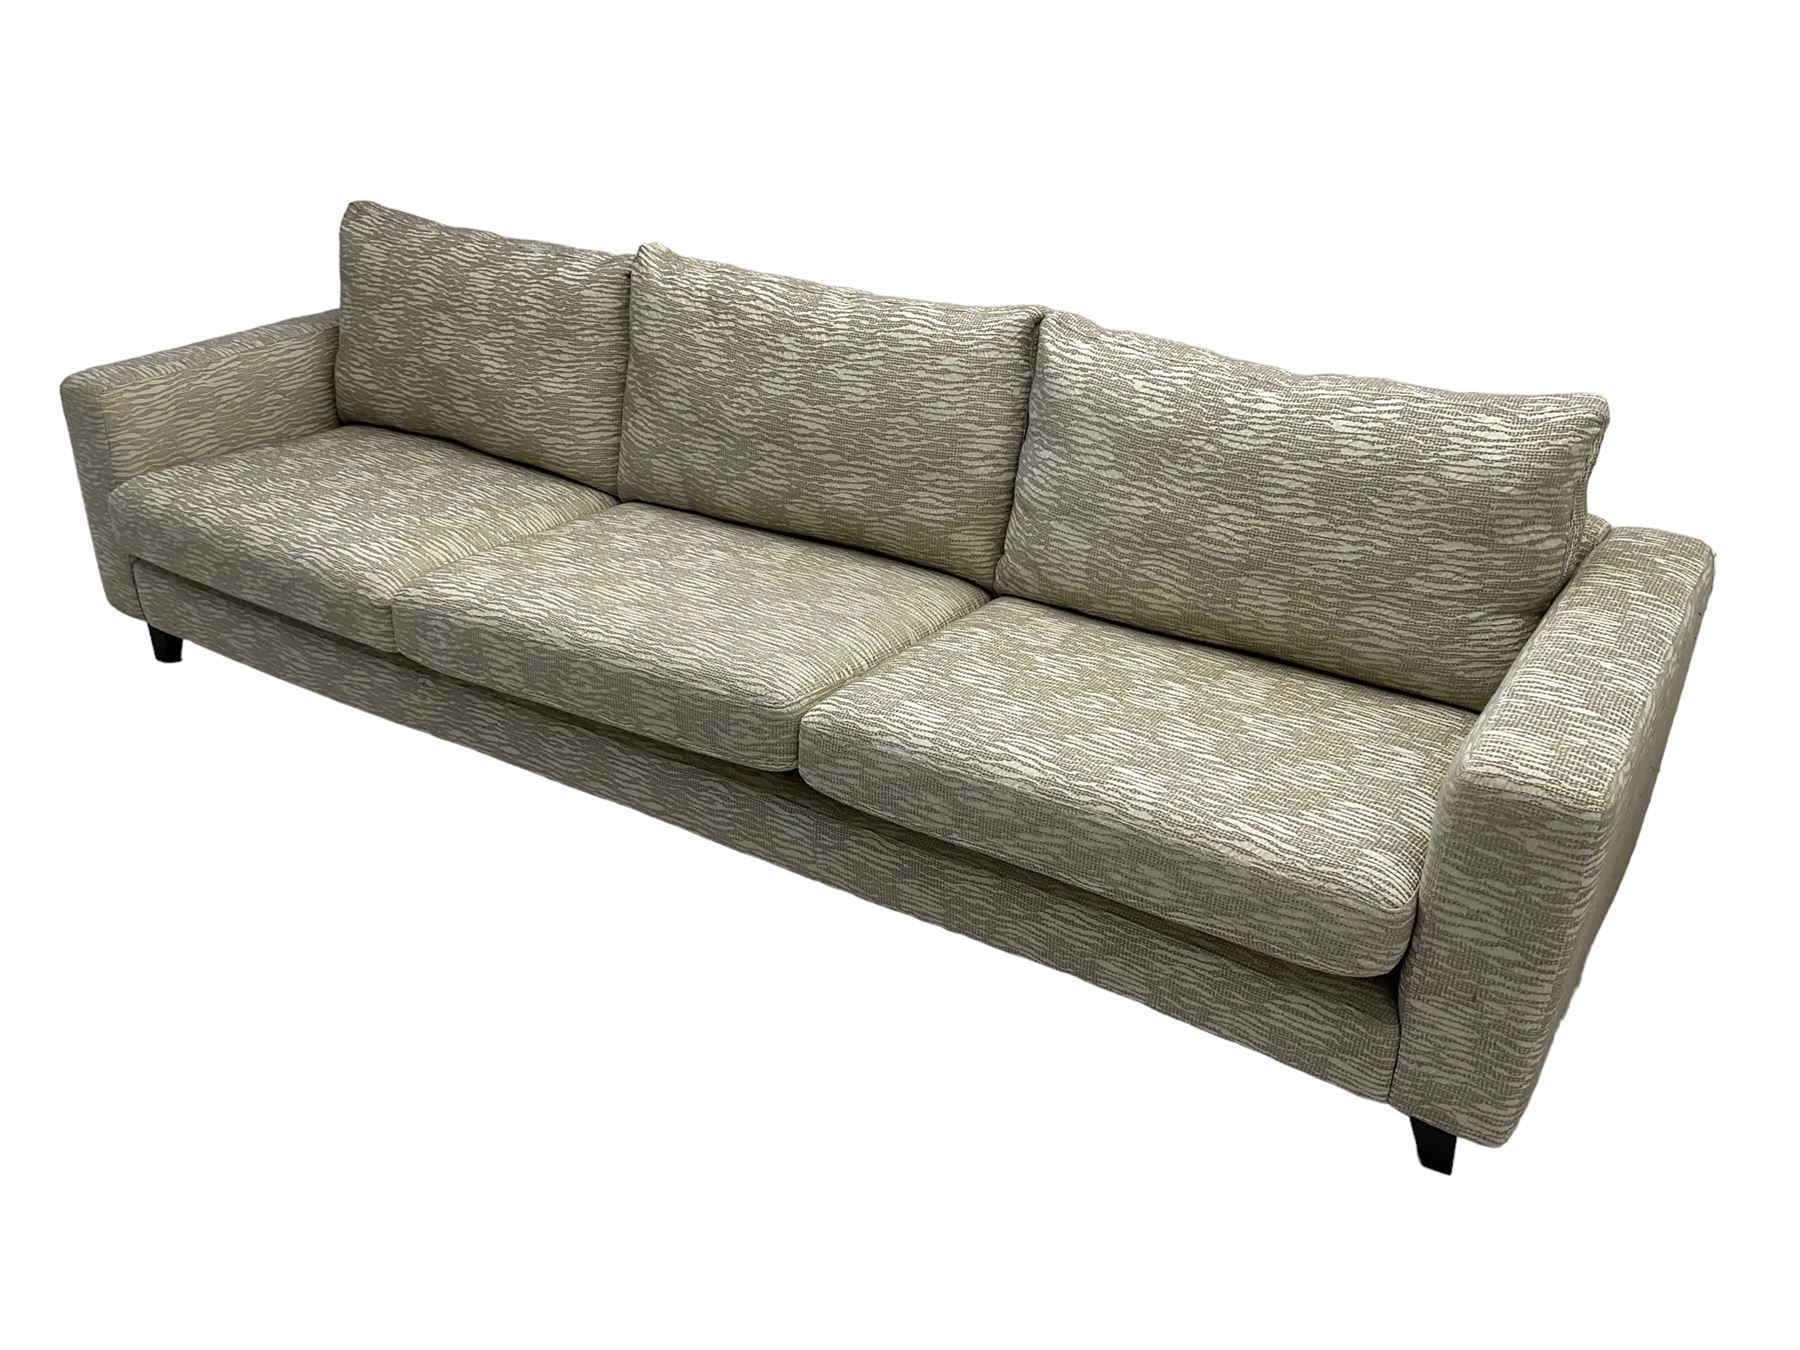 Orior - contemporary large three seat sofa - Image 4 of 7